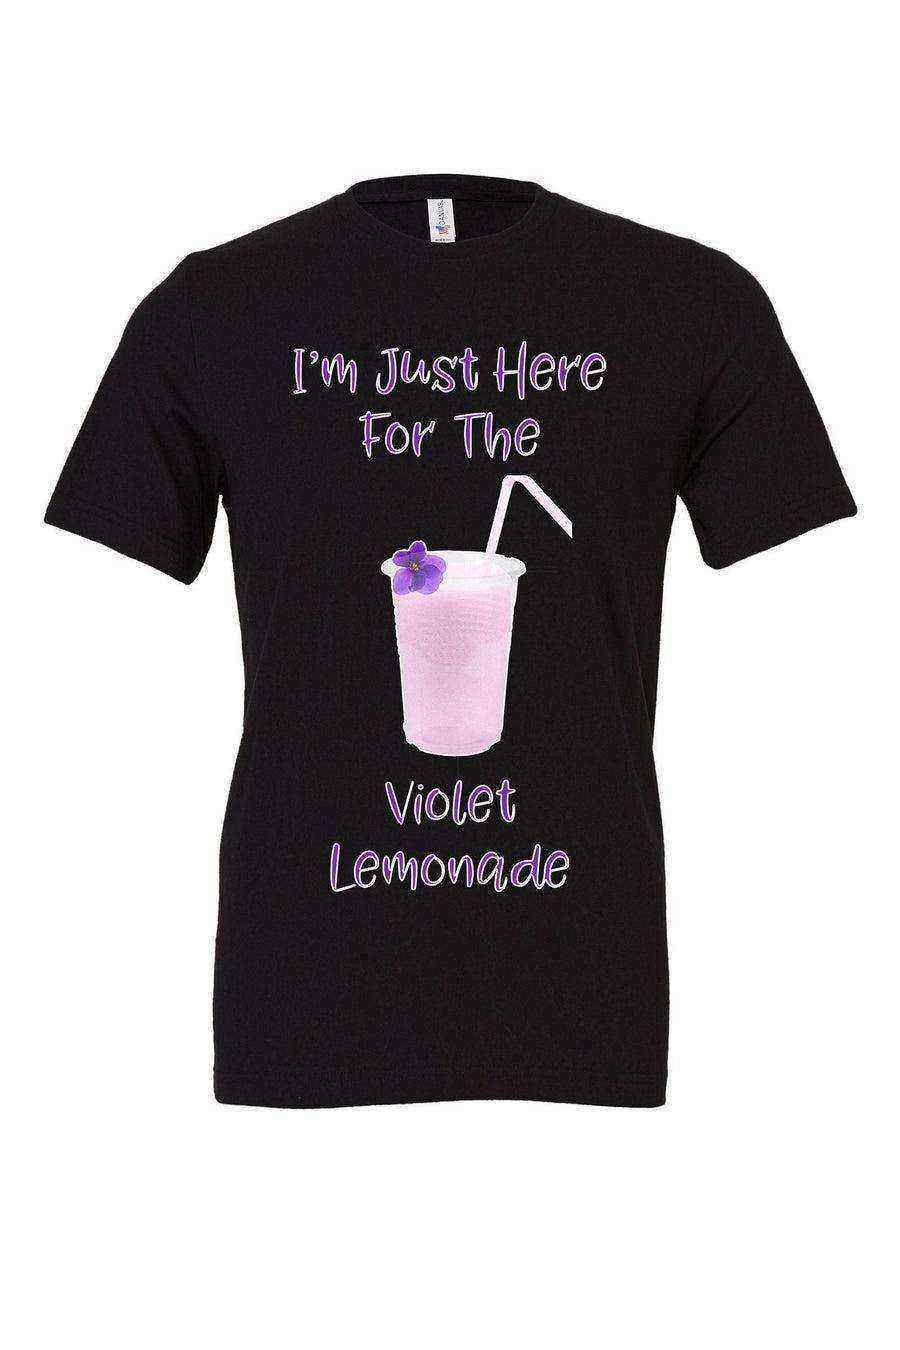 Im Just Here For The Violet Lemonade Tee - Dylan's Tees